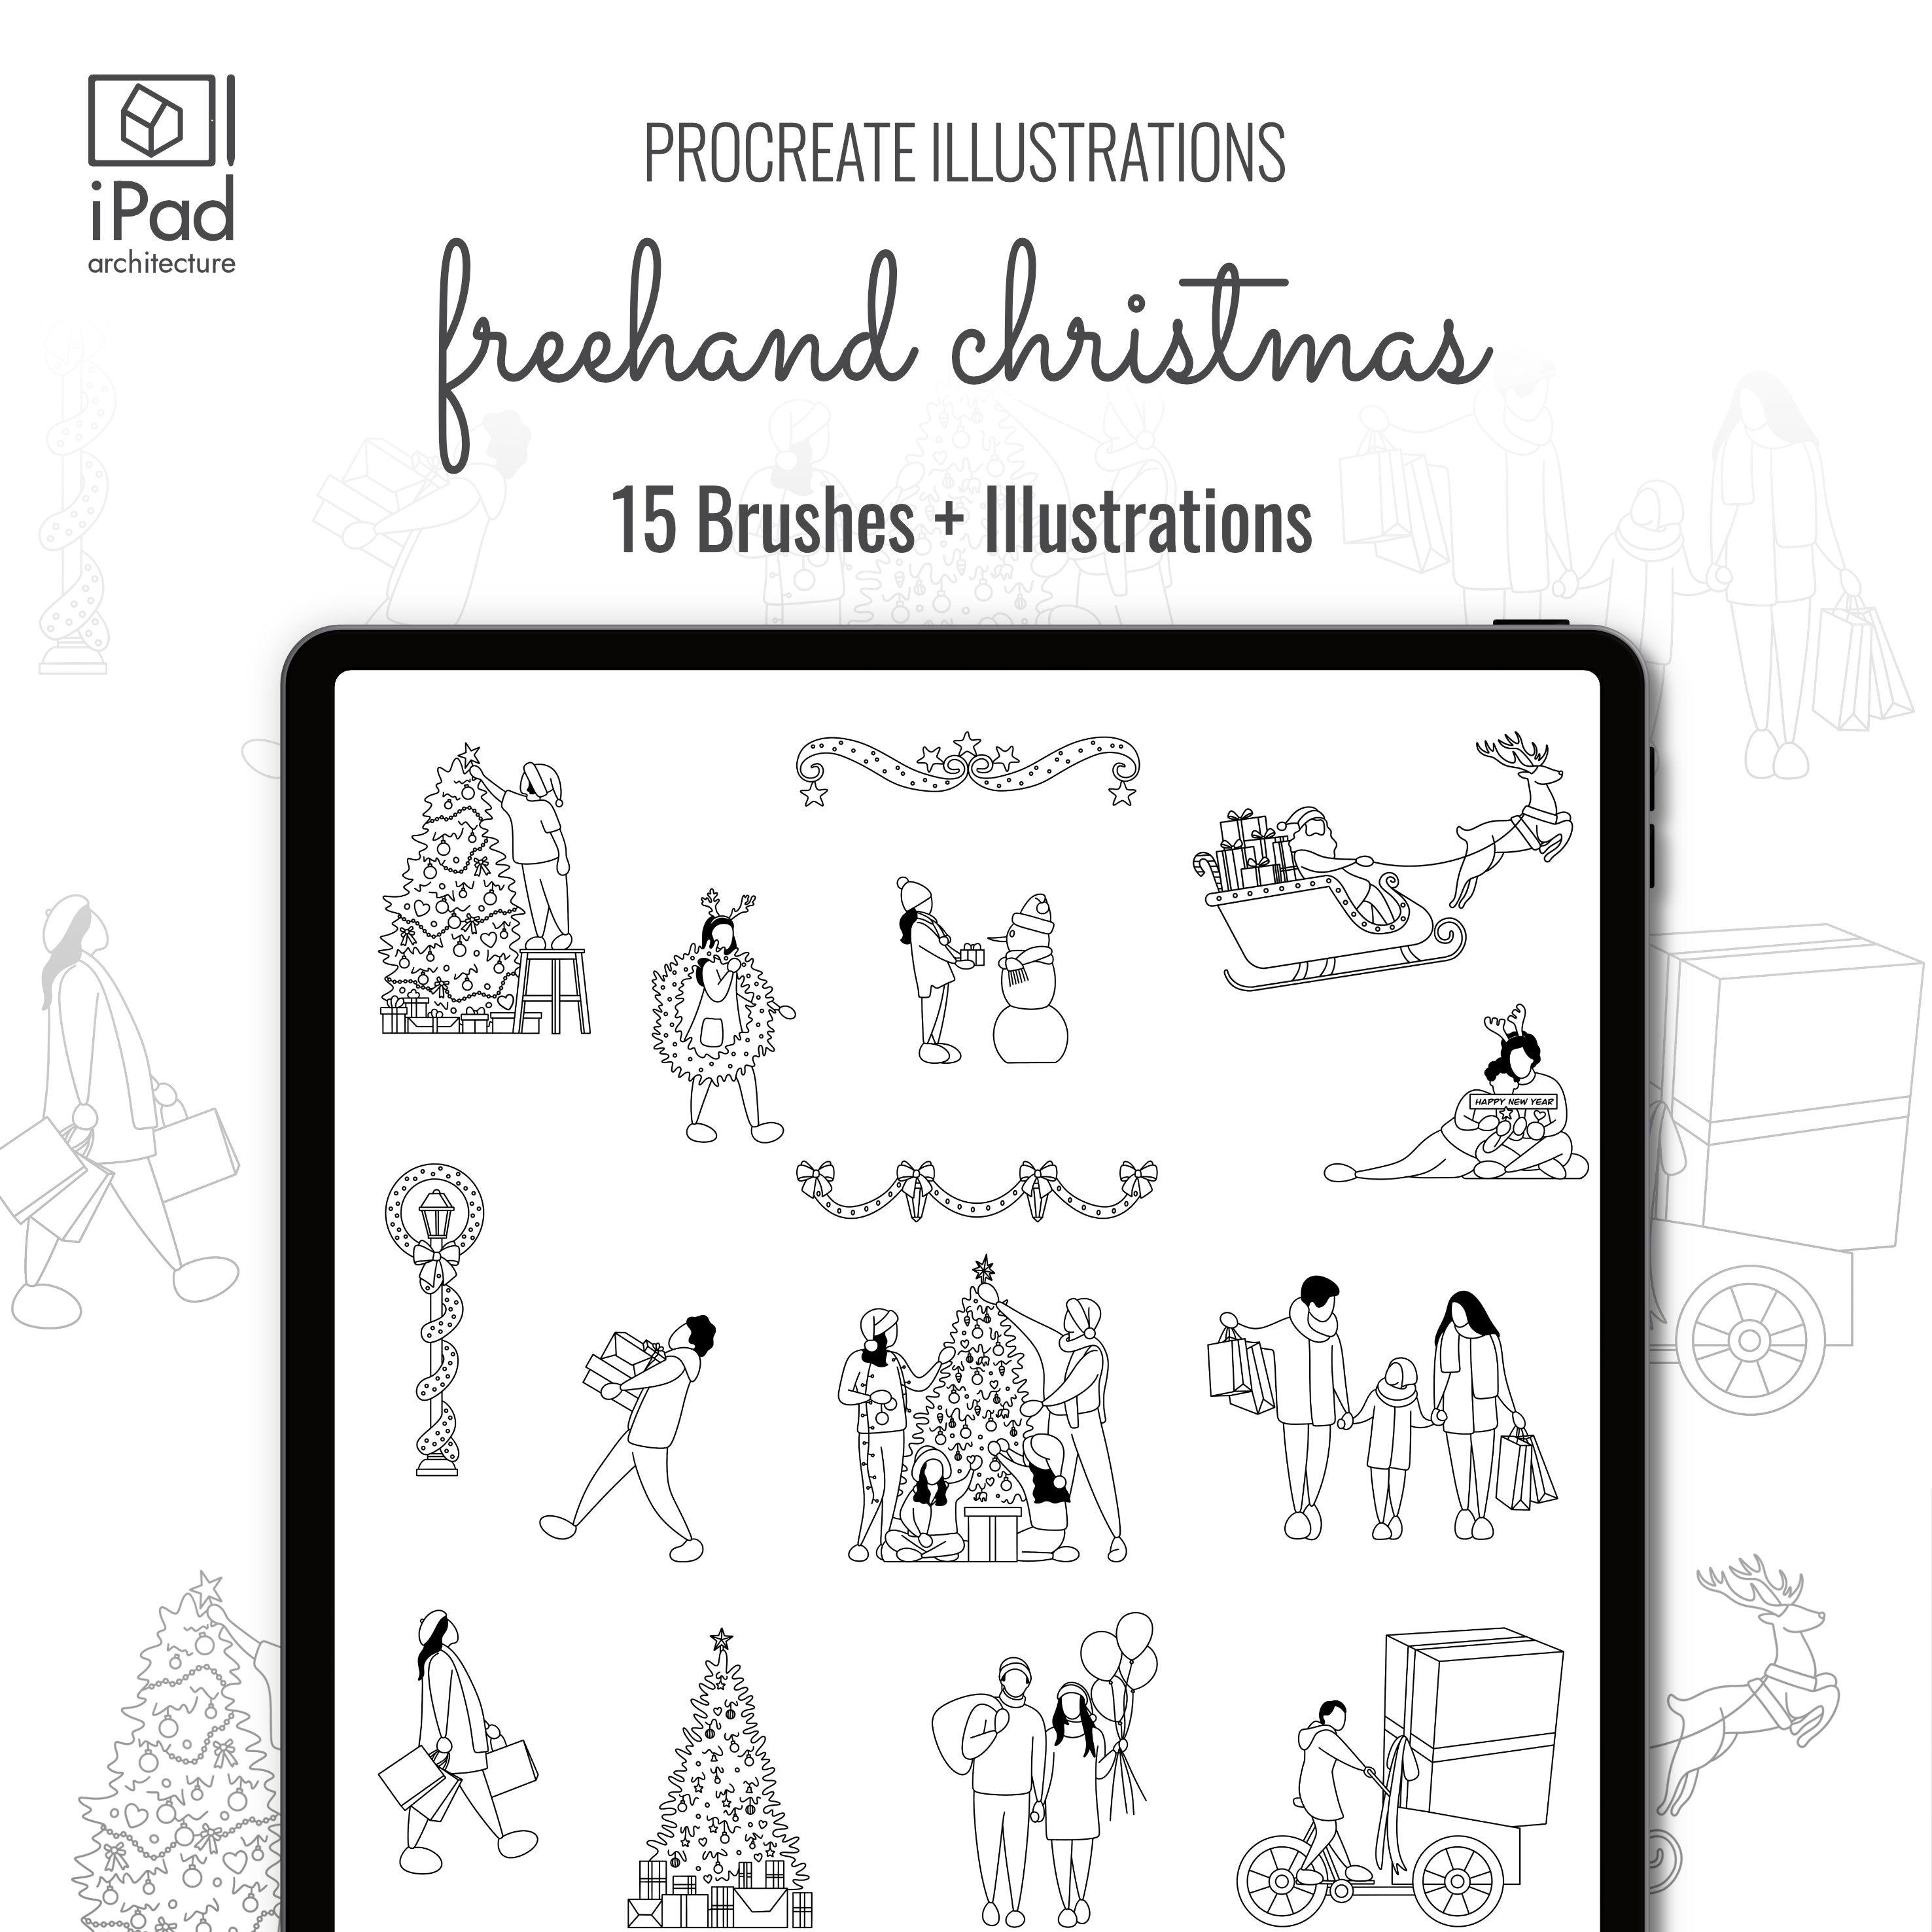 Free - Procreate Freehand Christmas Brushset & Illustrations PNG - Toffu Co